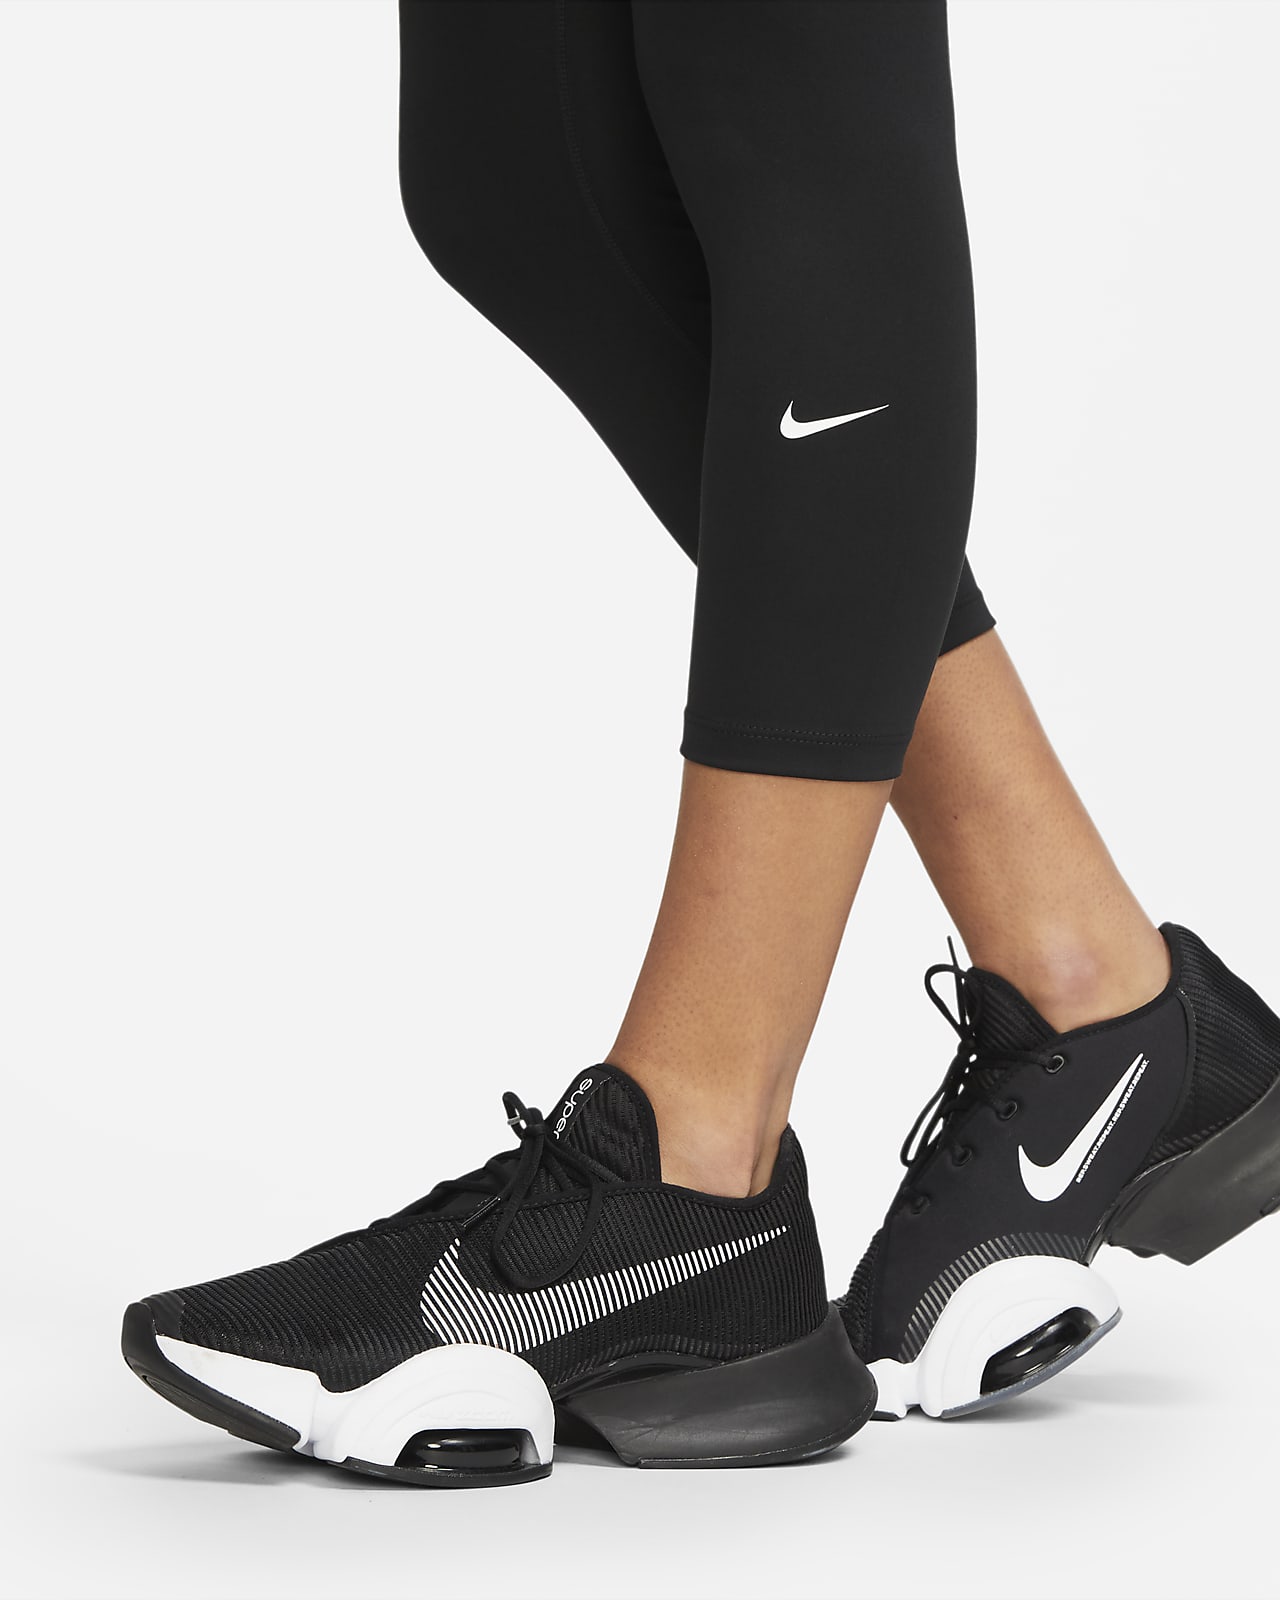 Nike One W Leggings - DM7276-615